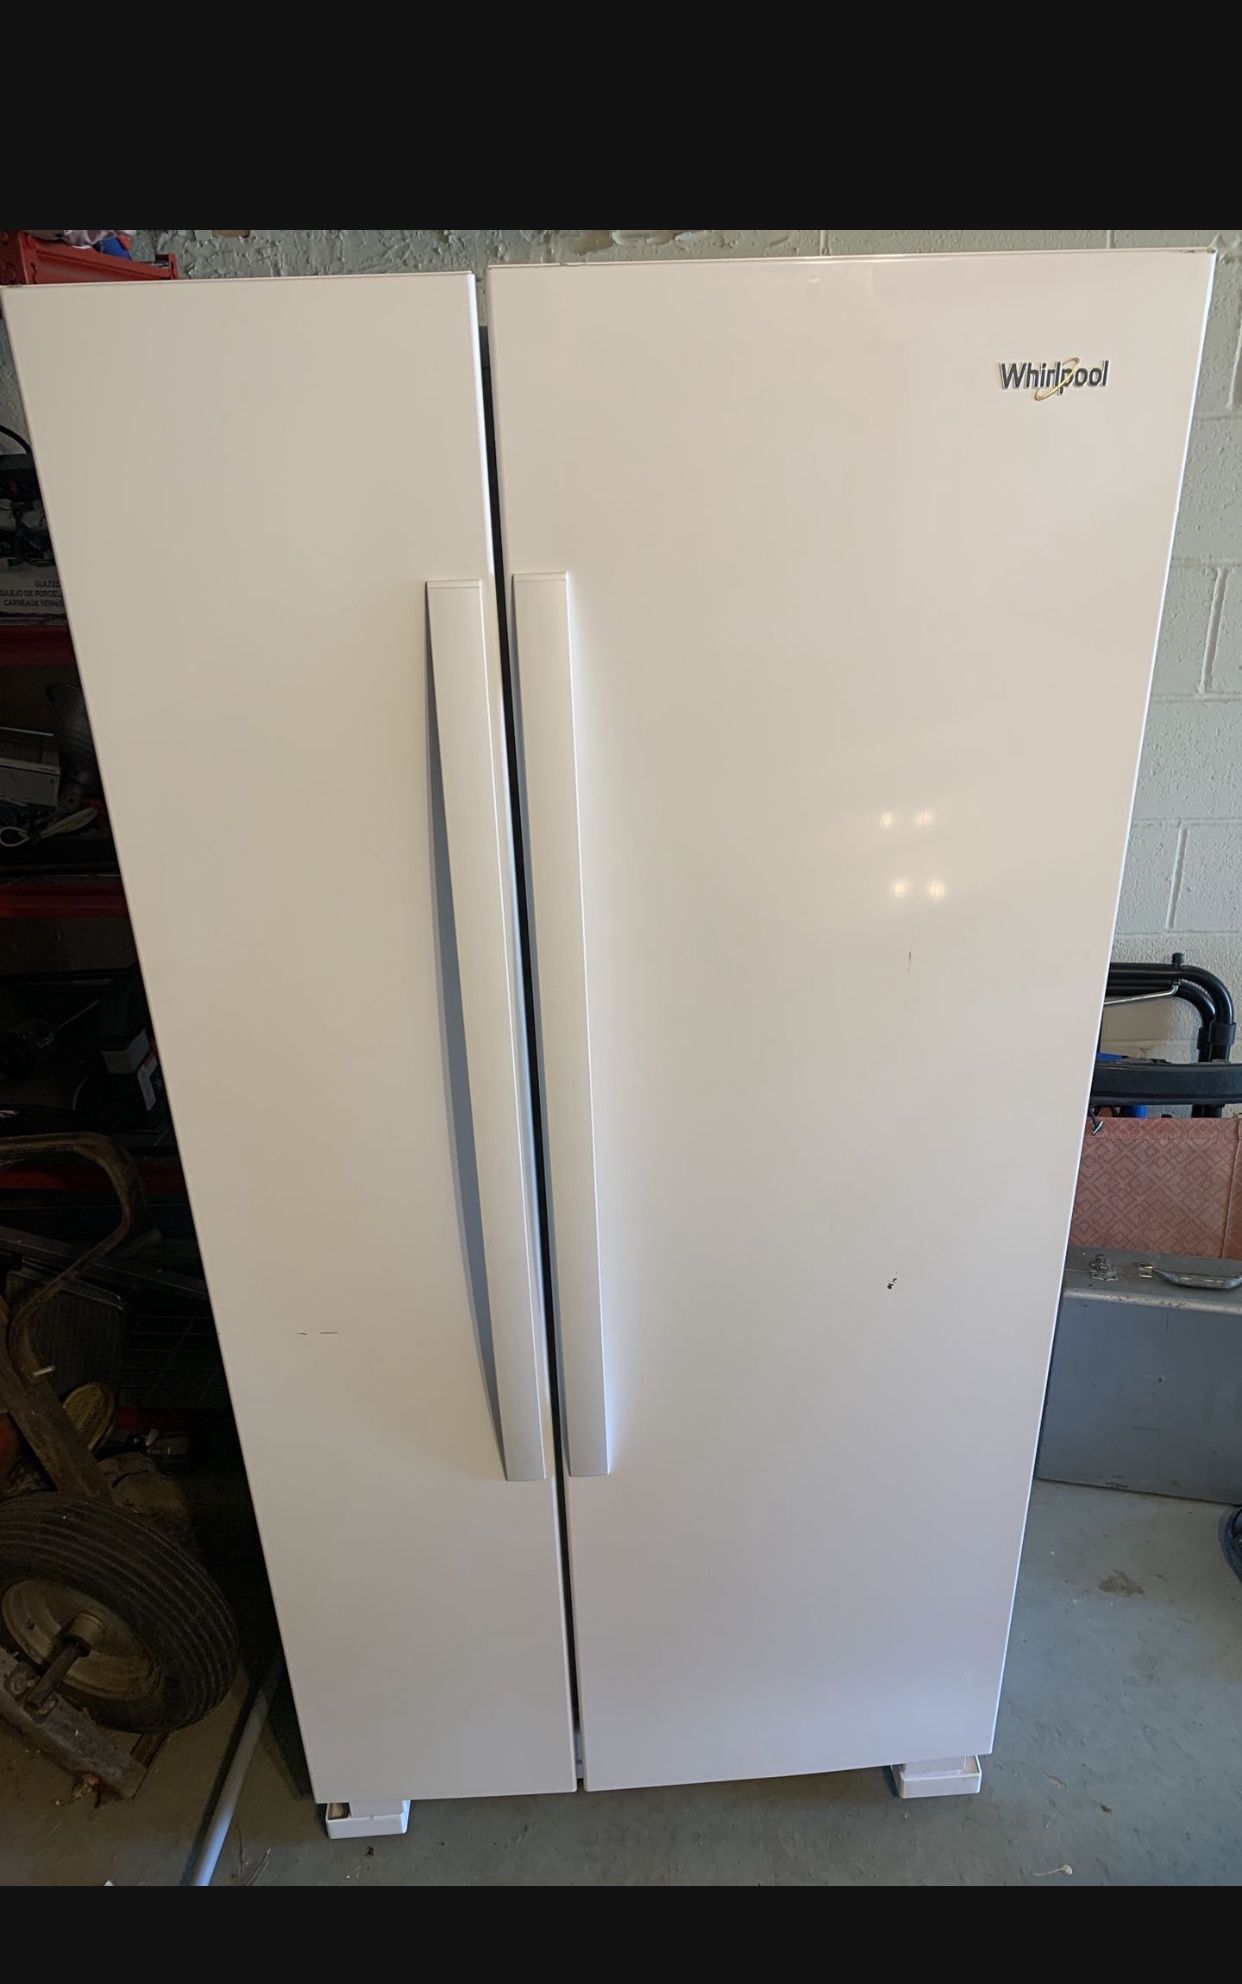 Whirlpool 33-inch Wide Side-by-Side Refrigerator - 22 cu. ft.